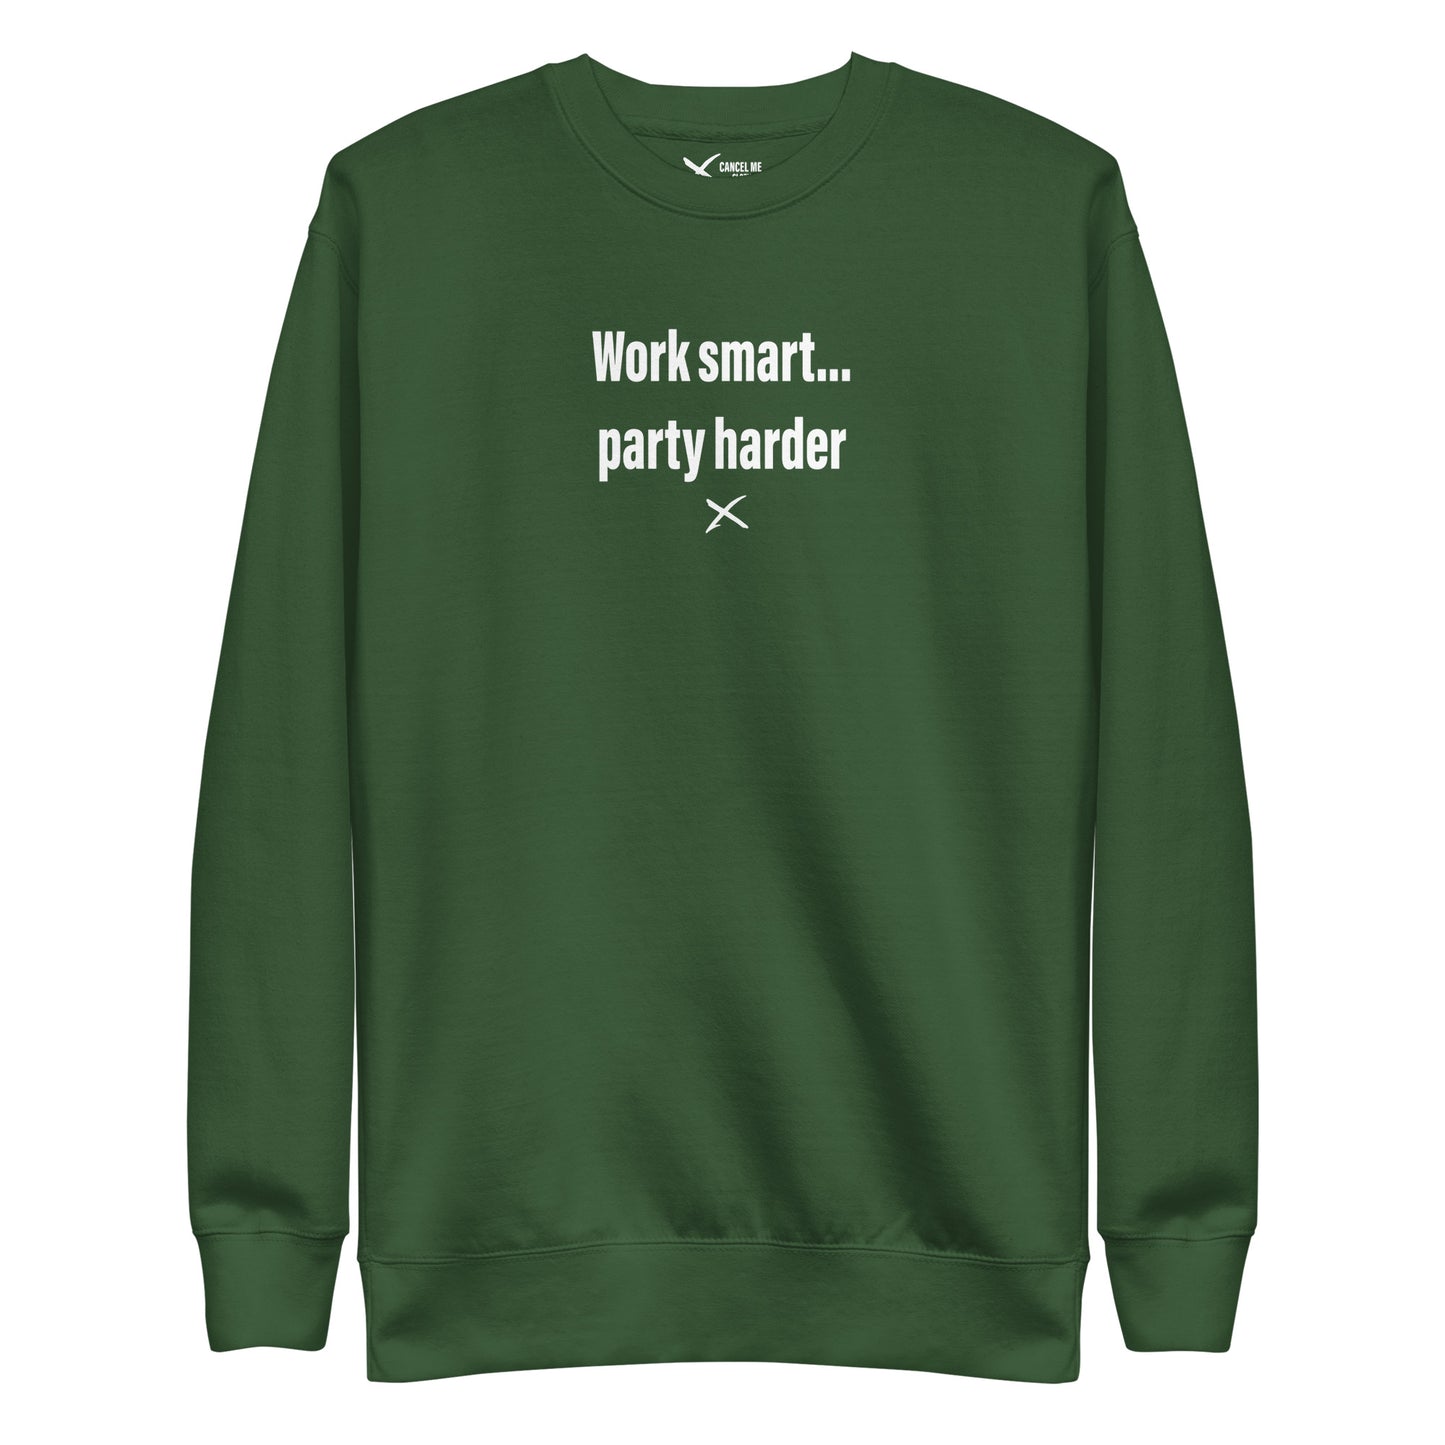 Work smart... party harder - Sweatshirt